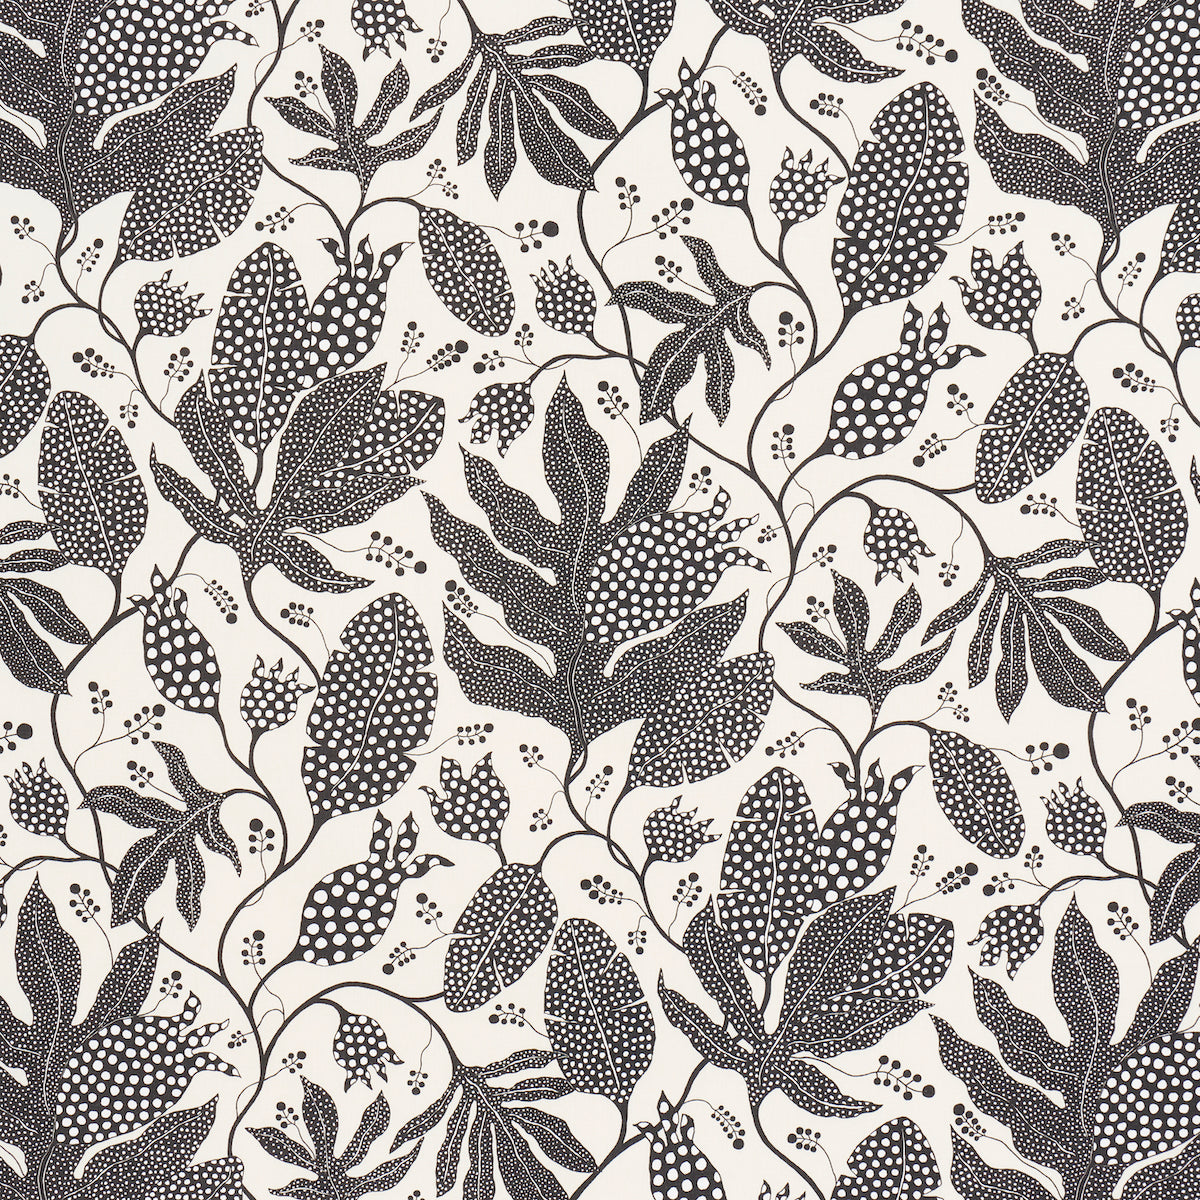 Purchase 181653 | Polka Dot Jungle, Black & Cream - Schumacher Fabric